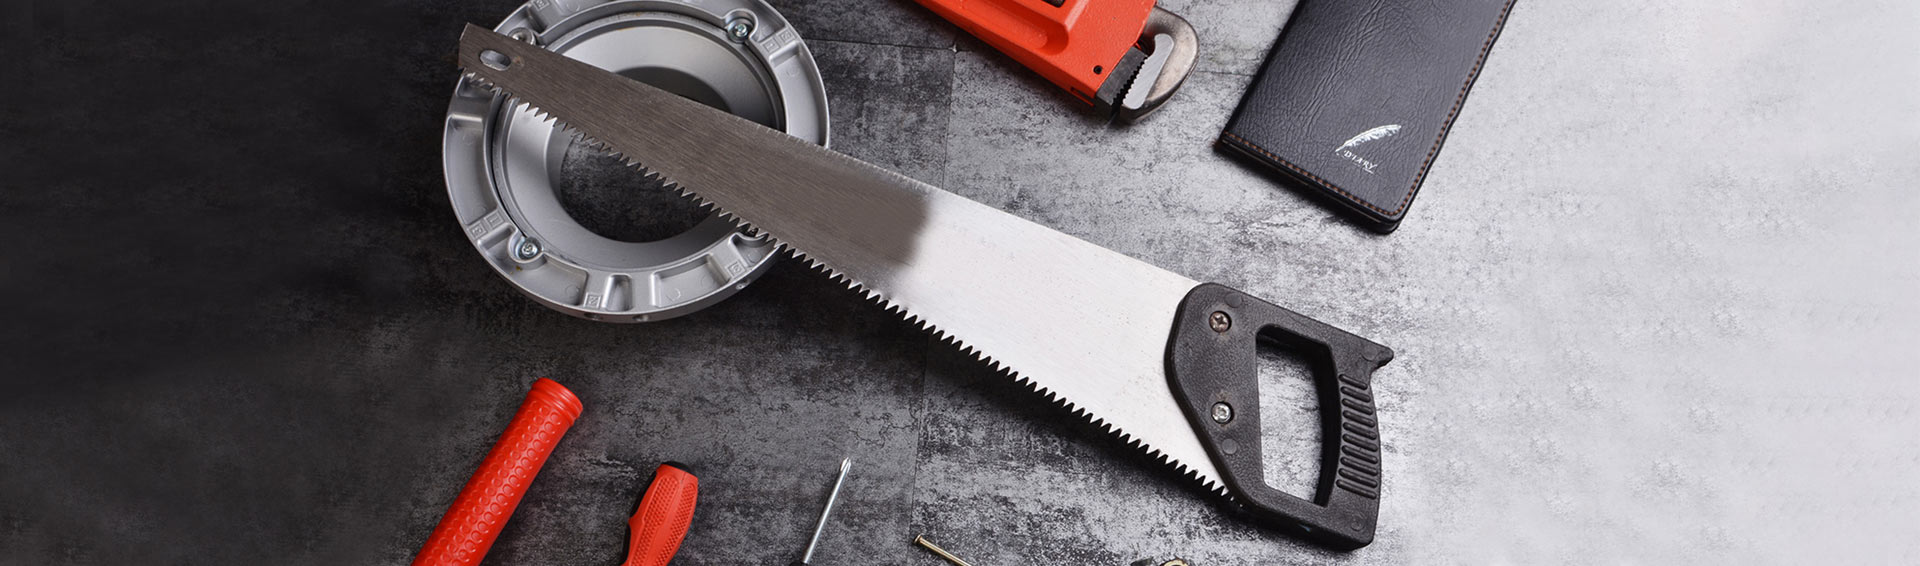 www.homedepot.com › b › Tools-Hand-Tools-CuttingWood - Hand Saws - Cutting Tools - The Home Depot